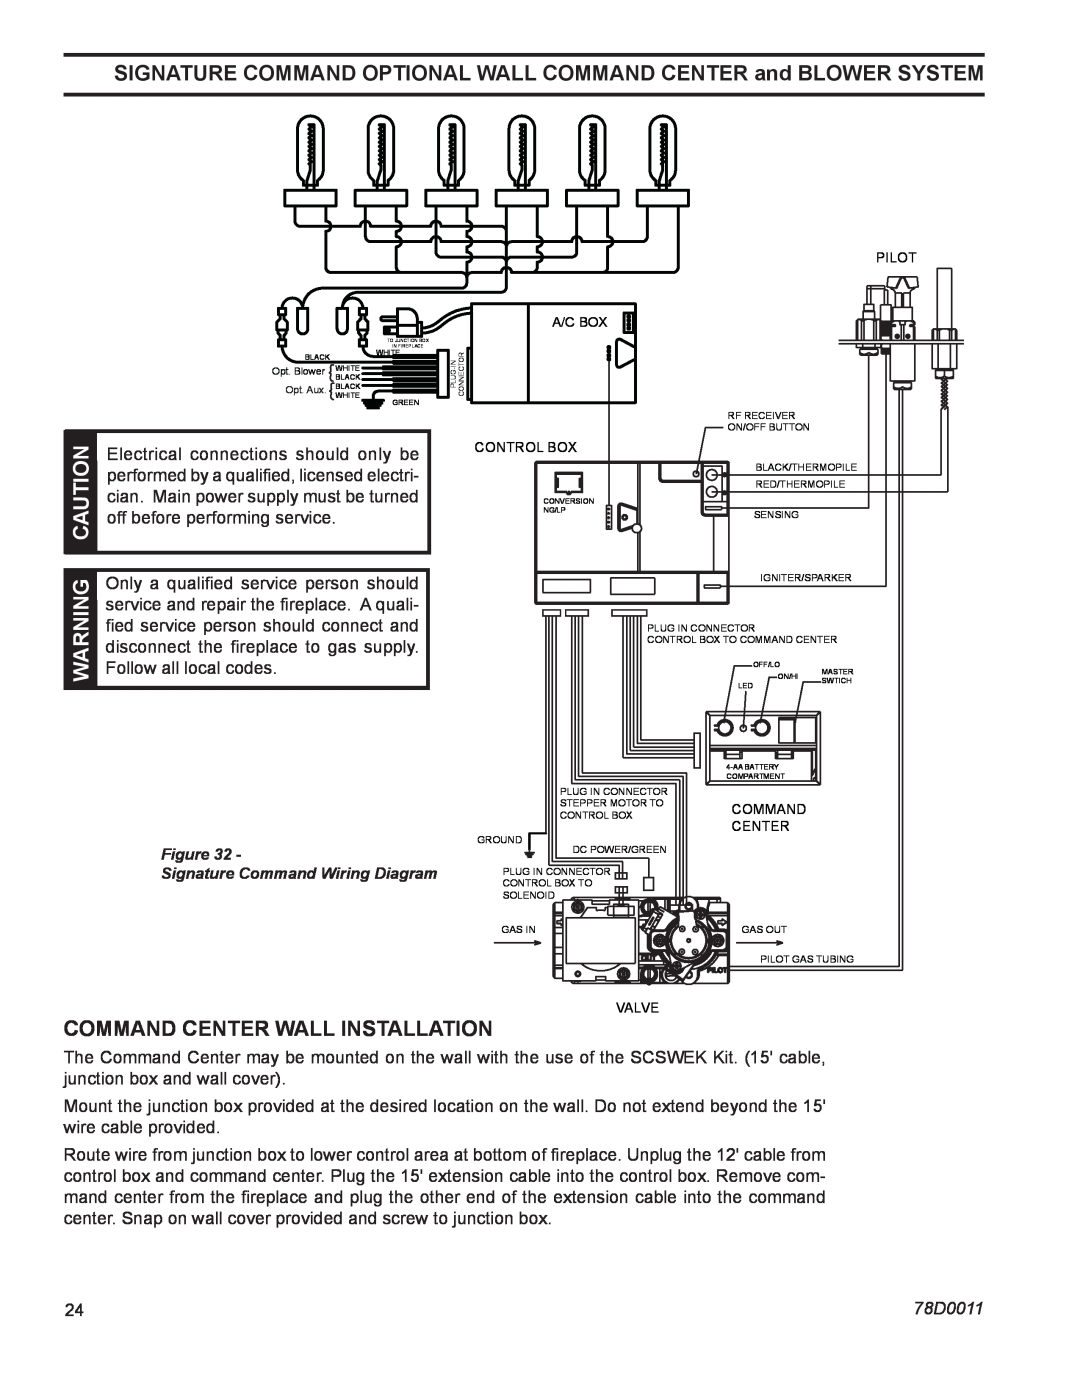 Monessen Hearth WDV500 manual Caut Nio Aw Rni Gn, Command Center Wall Installation, 78D0011 